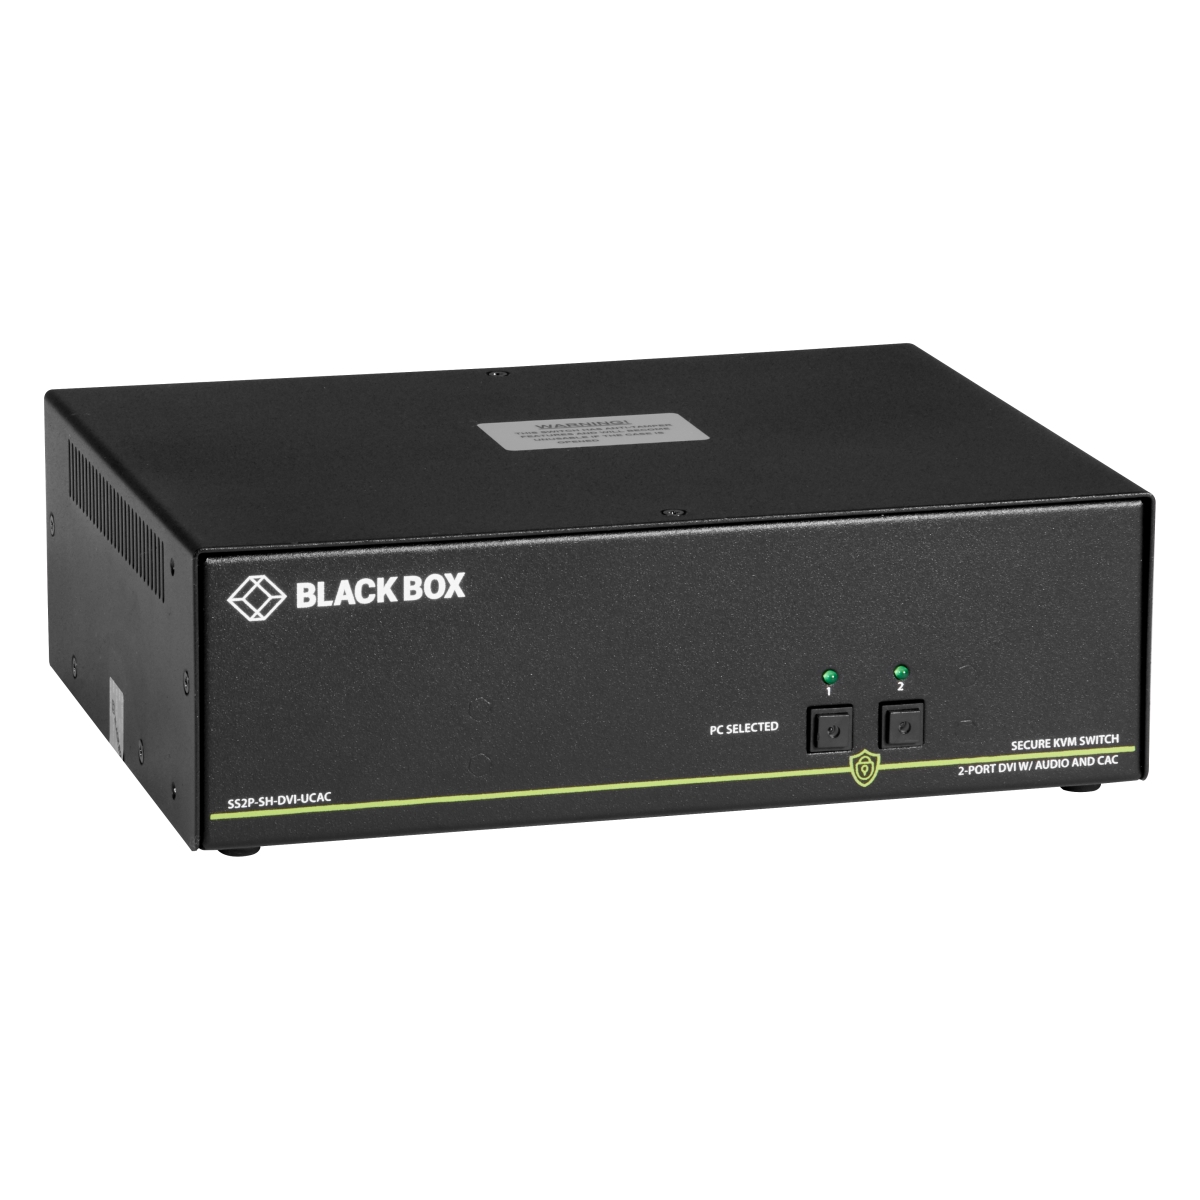 BLACK BOX NETWORK SERVICES SS2P-SH-DVI-U